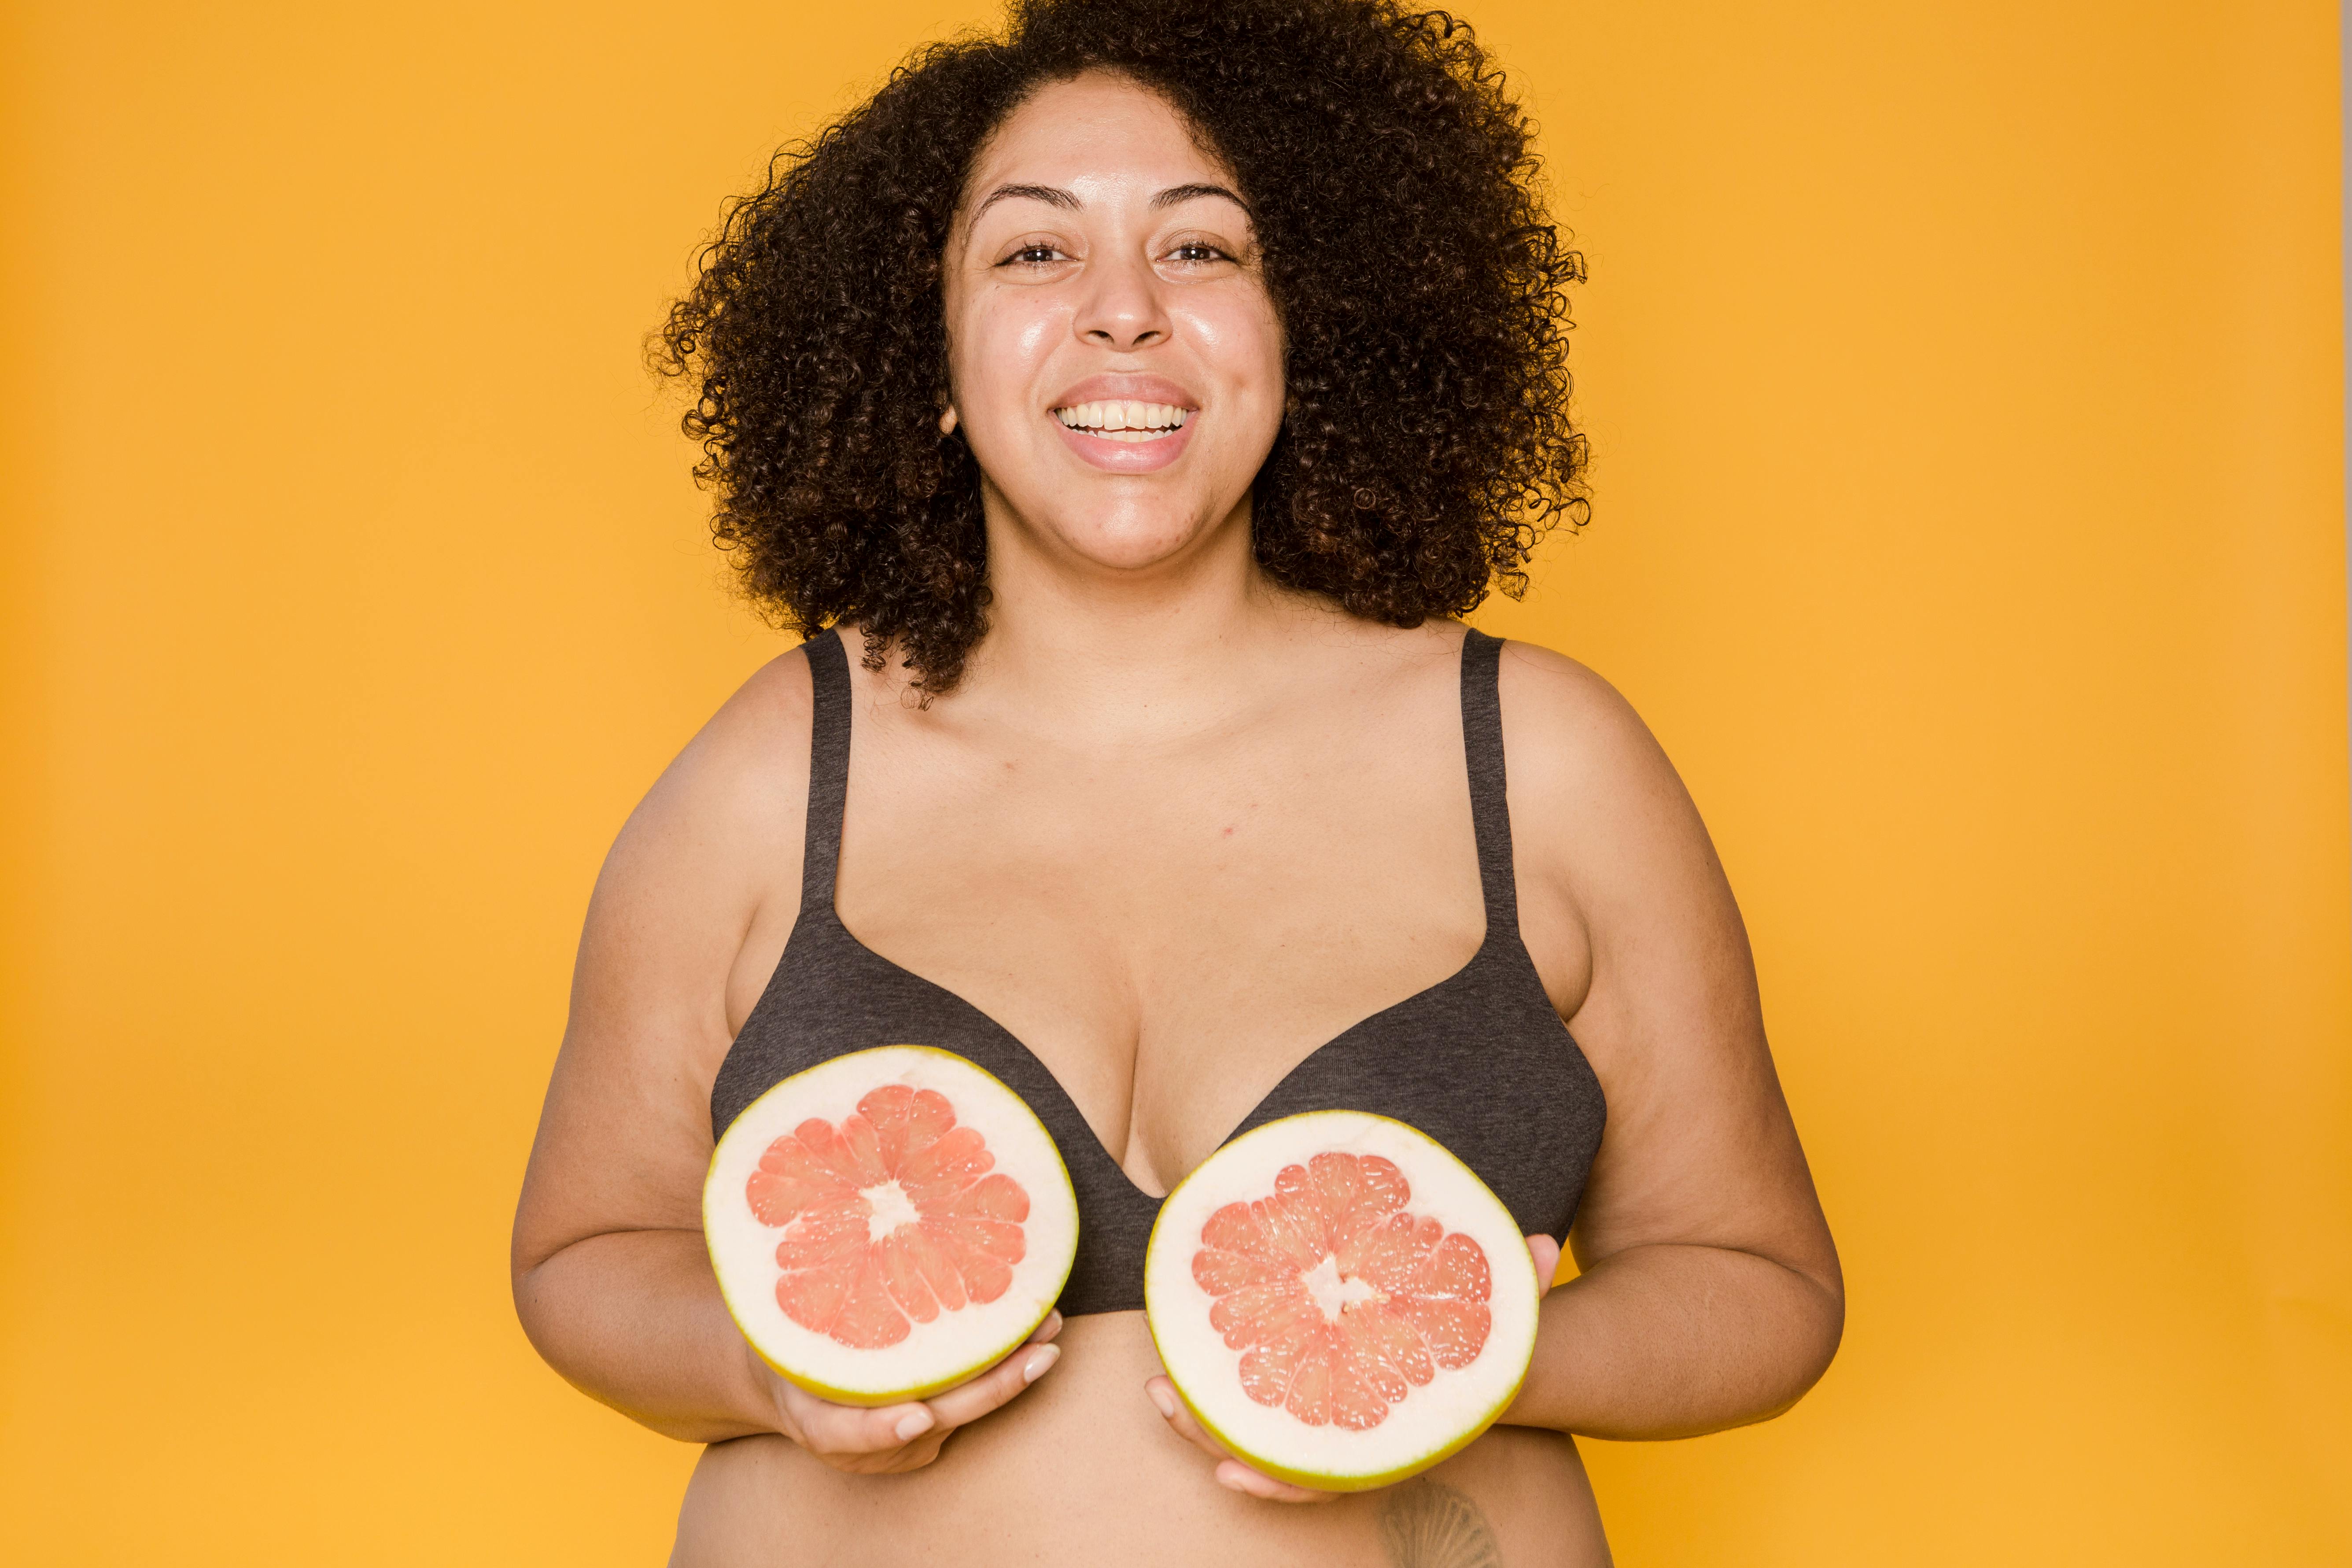 Women Wearing Their Underwear Holding a Sliced Grapefruit · Free